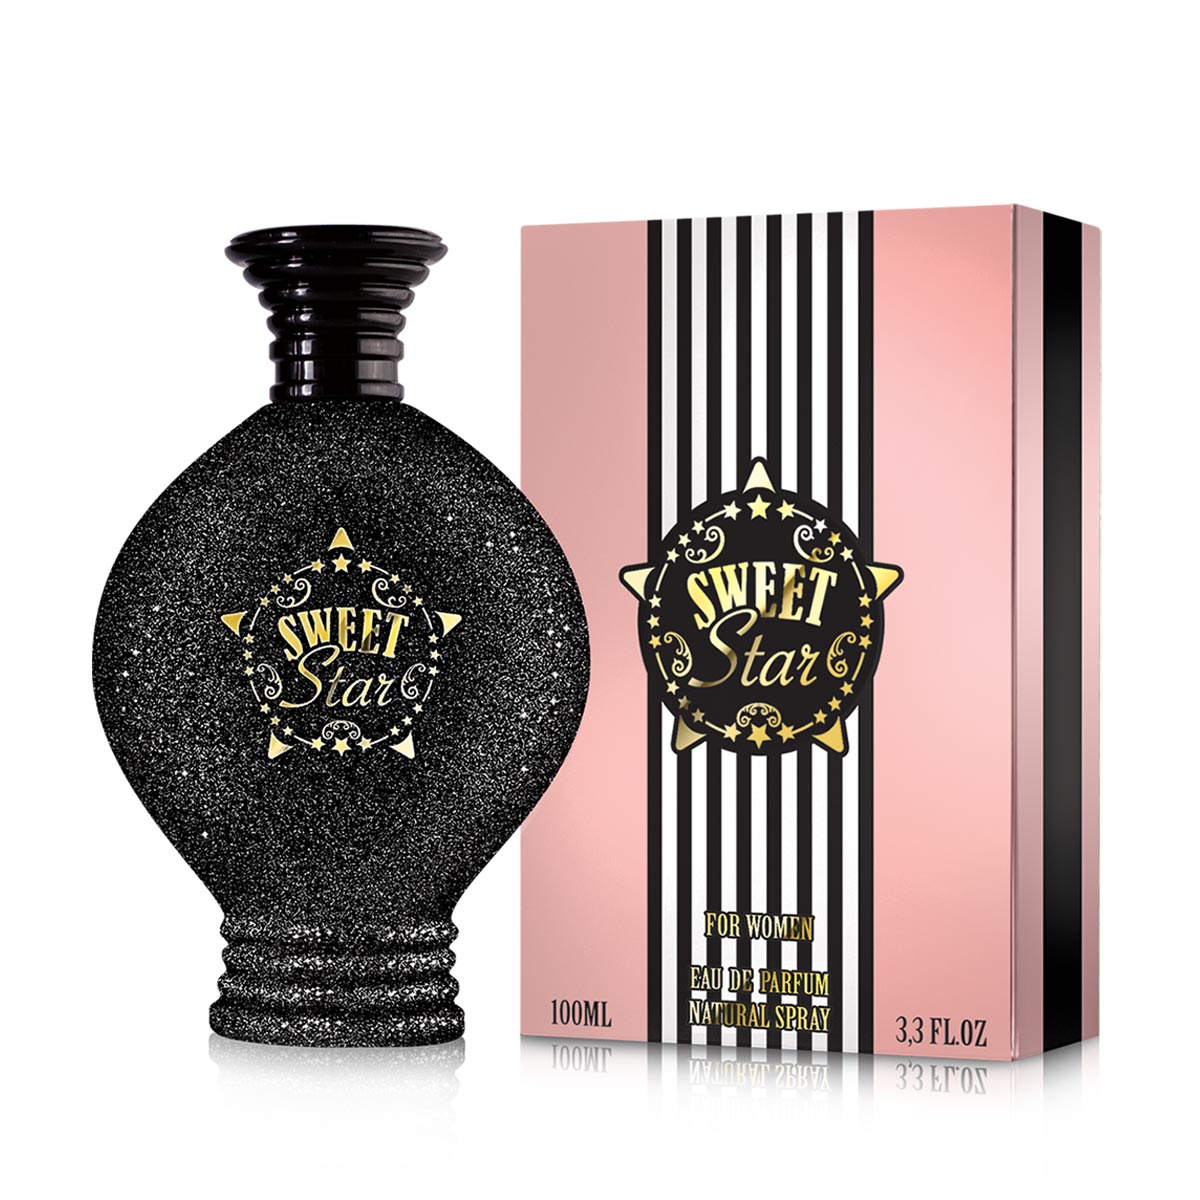 NB SWEET STAR WOMEN - PC Design Perfumes